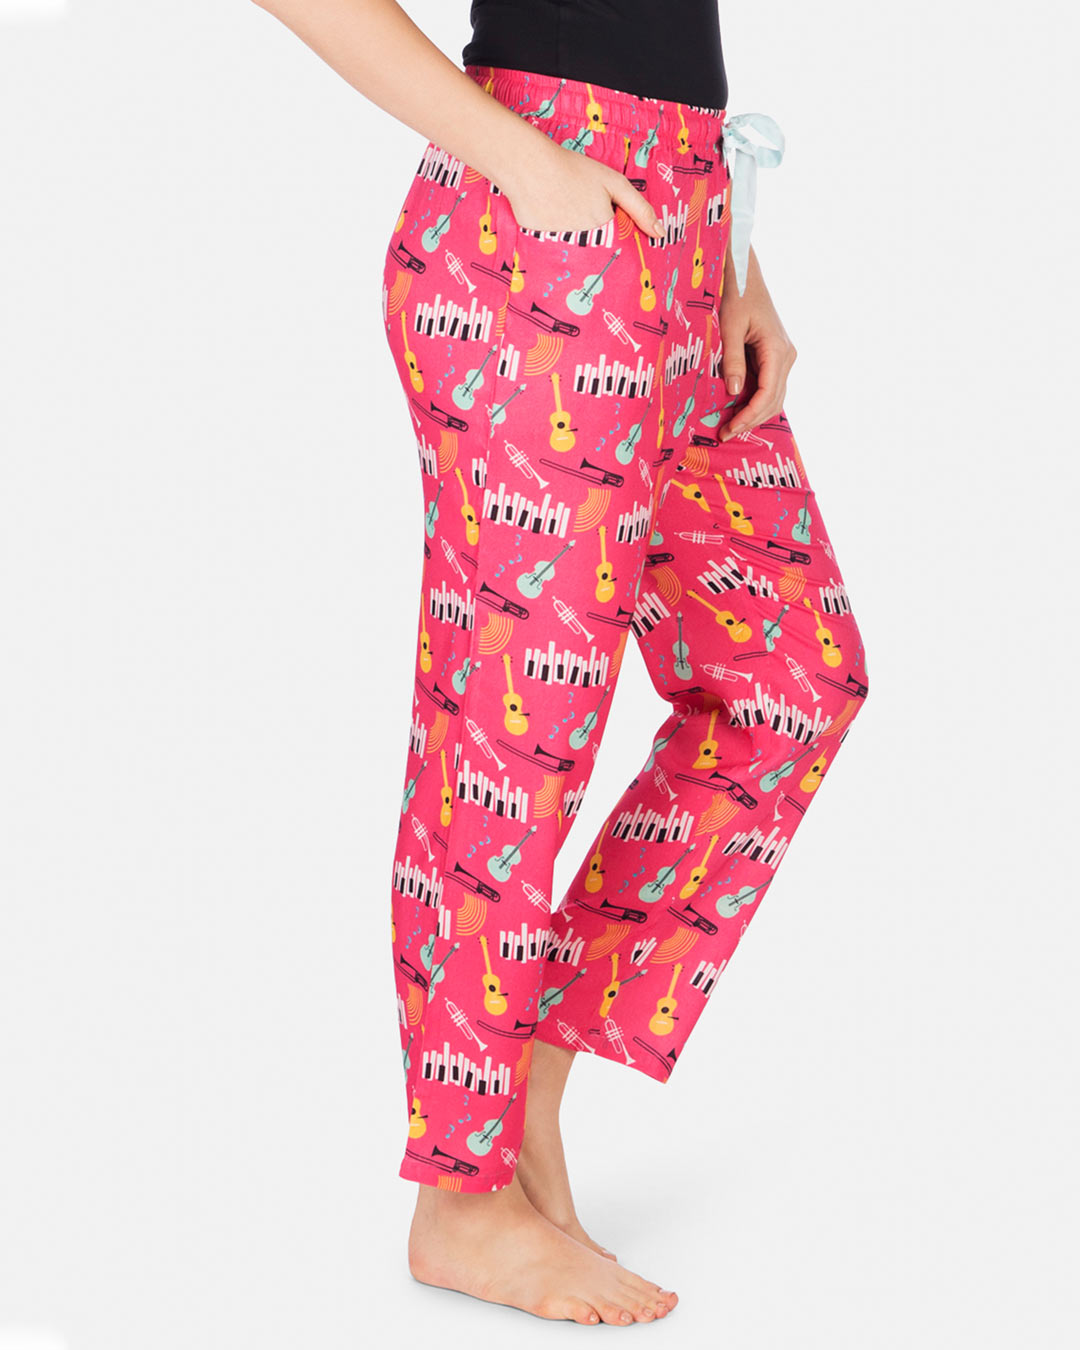 Shop Women's Pyjamas Jazz Music Pink-Back